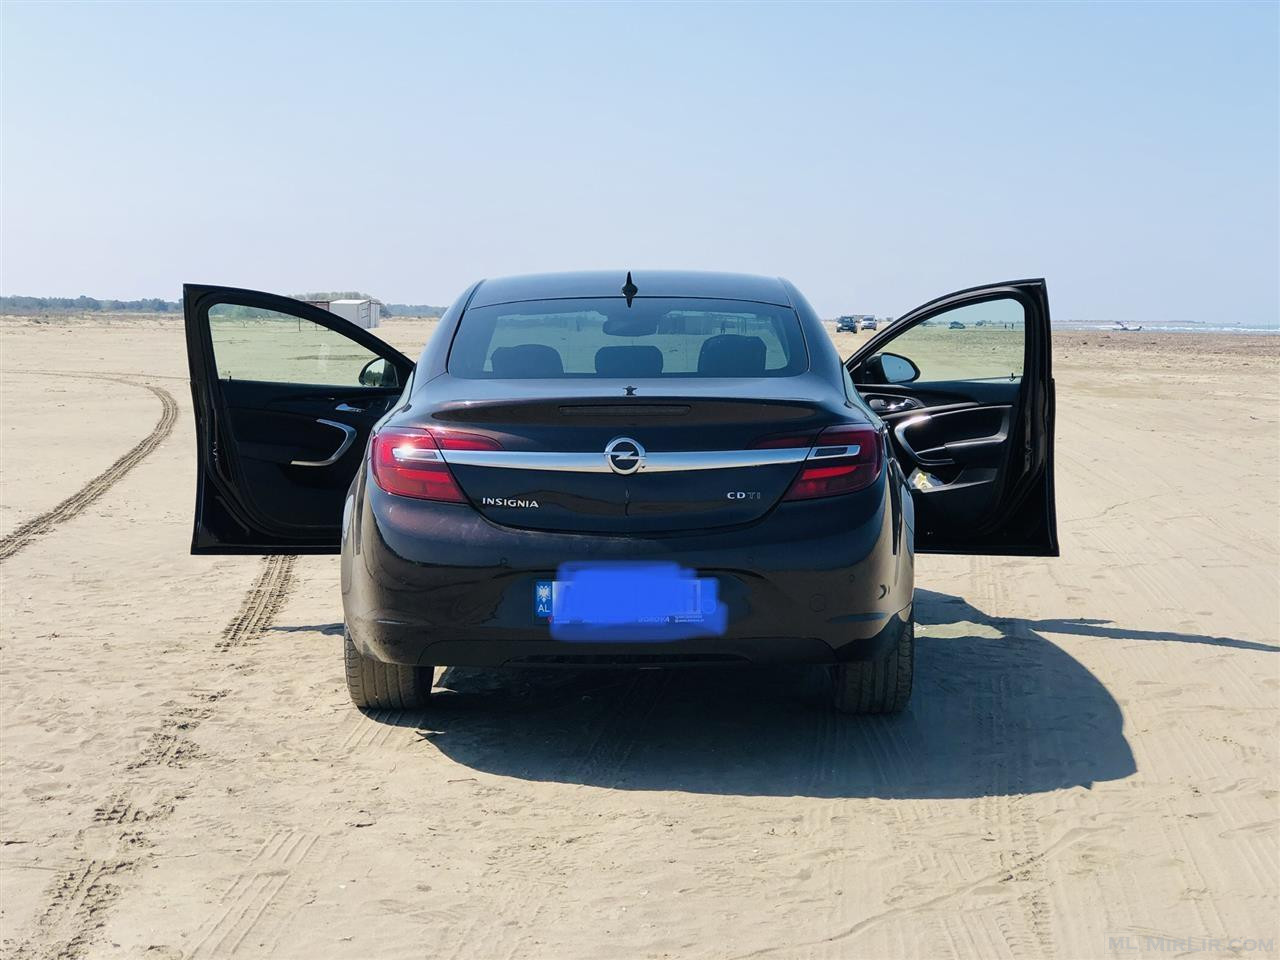 Okazion 7.999€ Opel Insingia